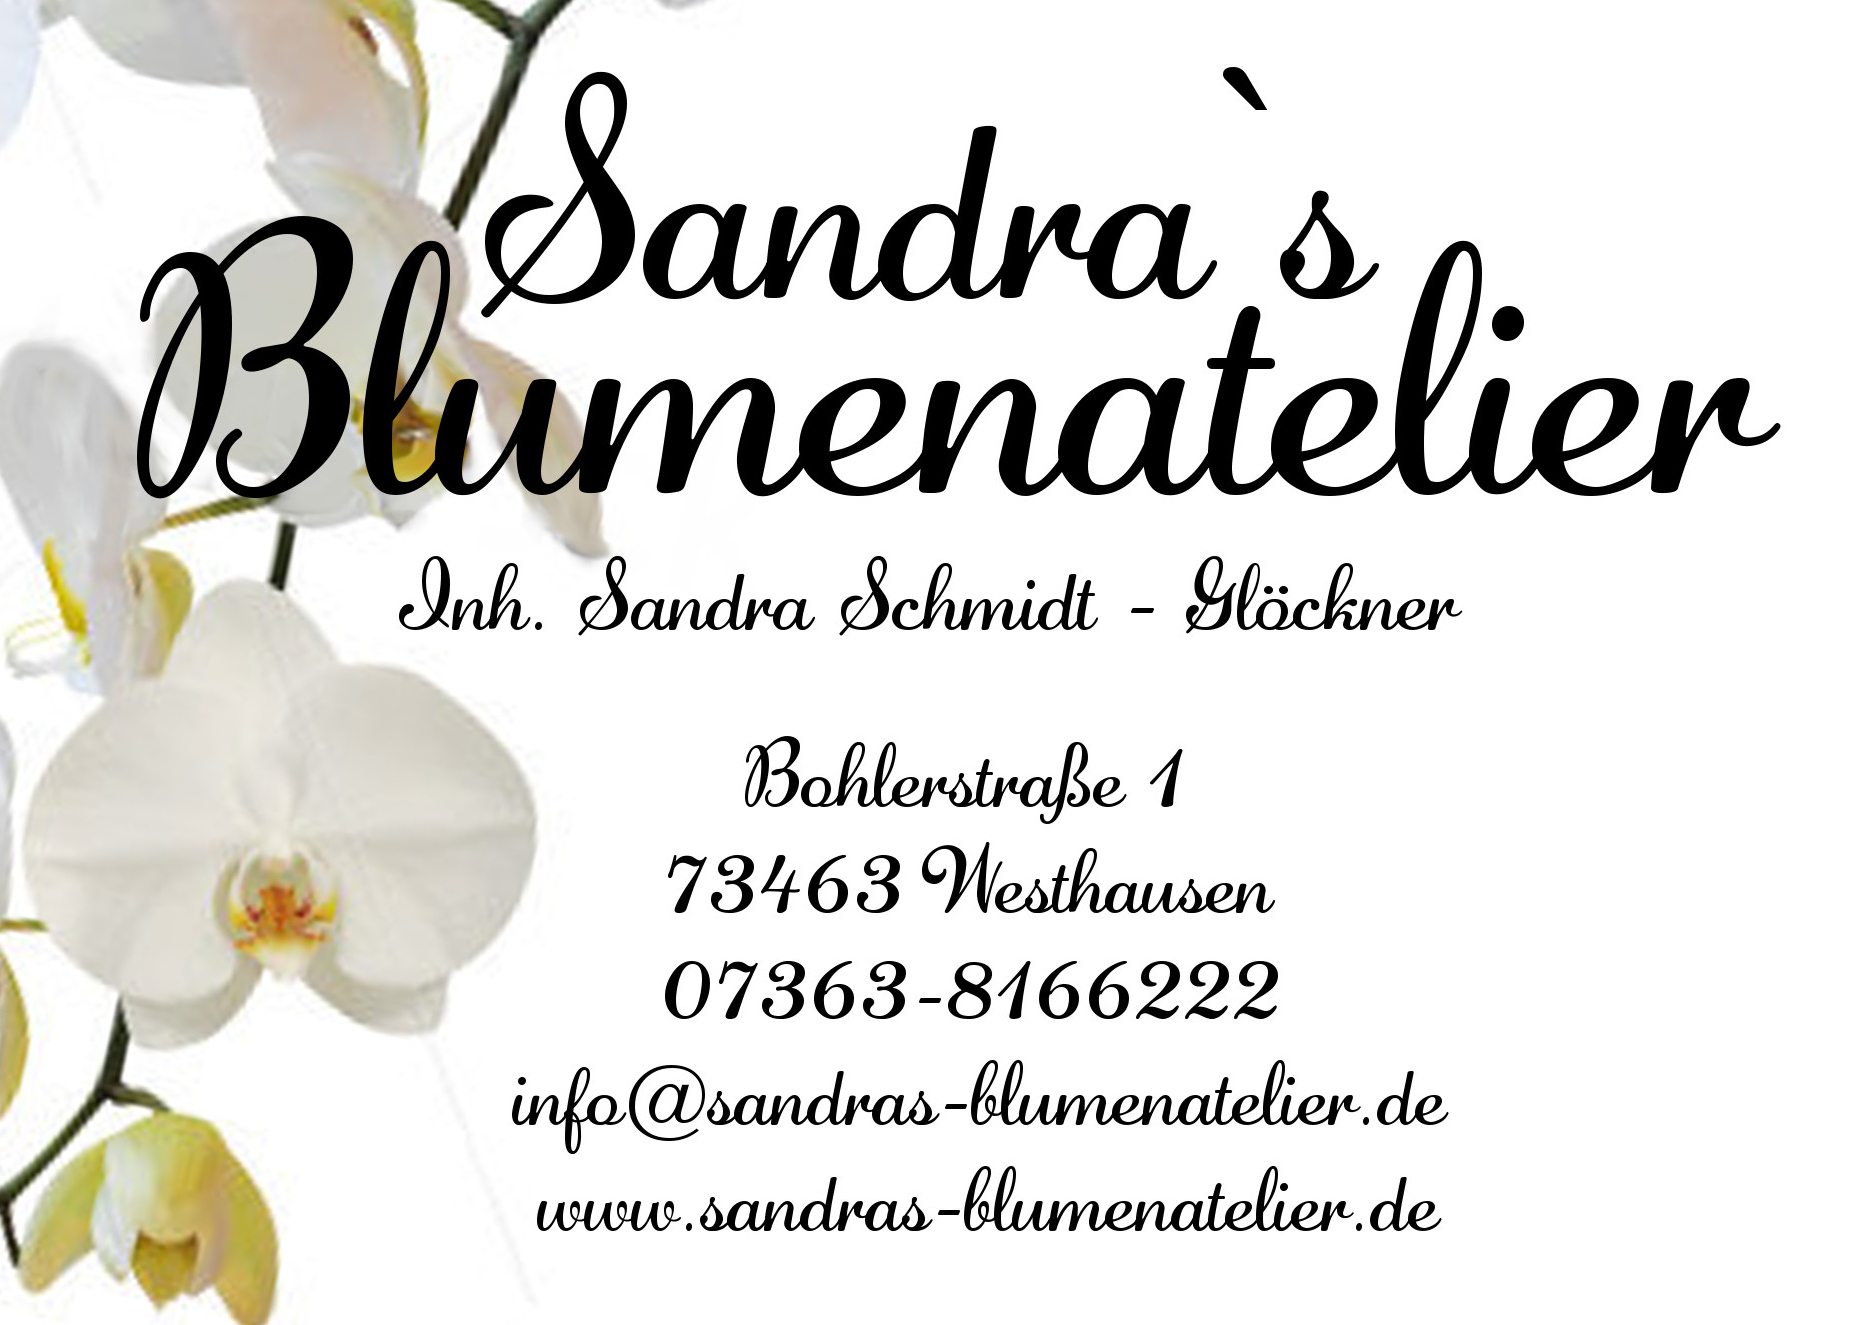 Sandras Blumenatelier